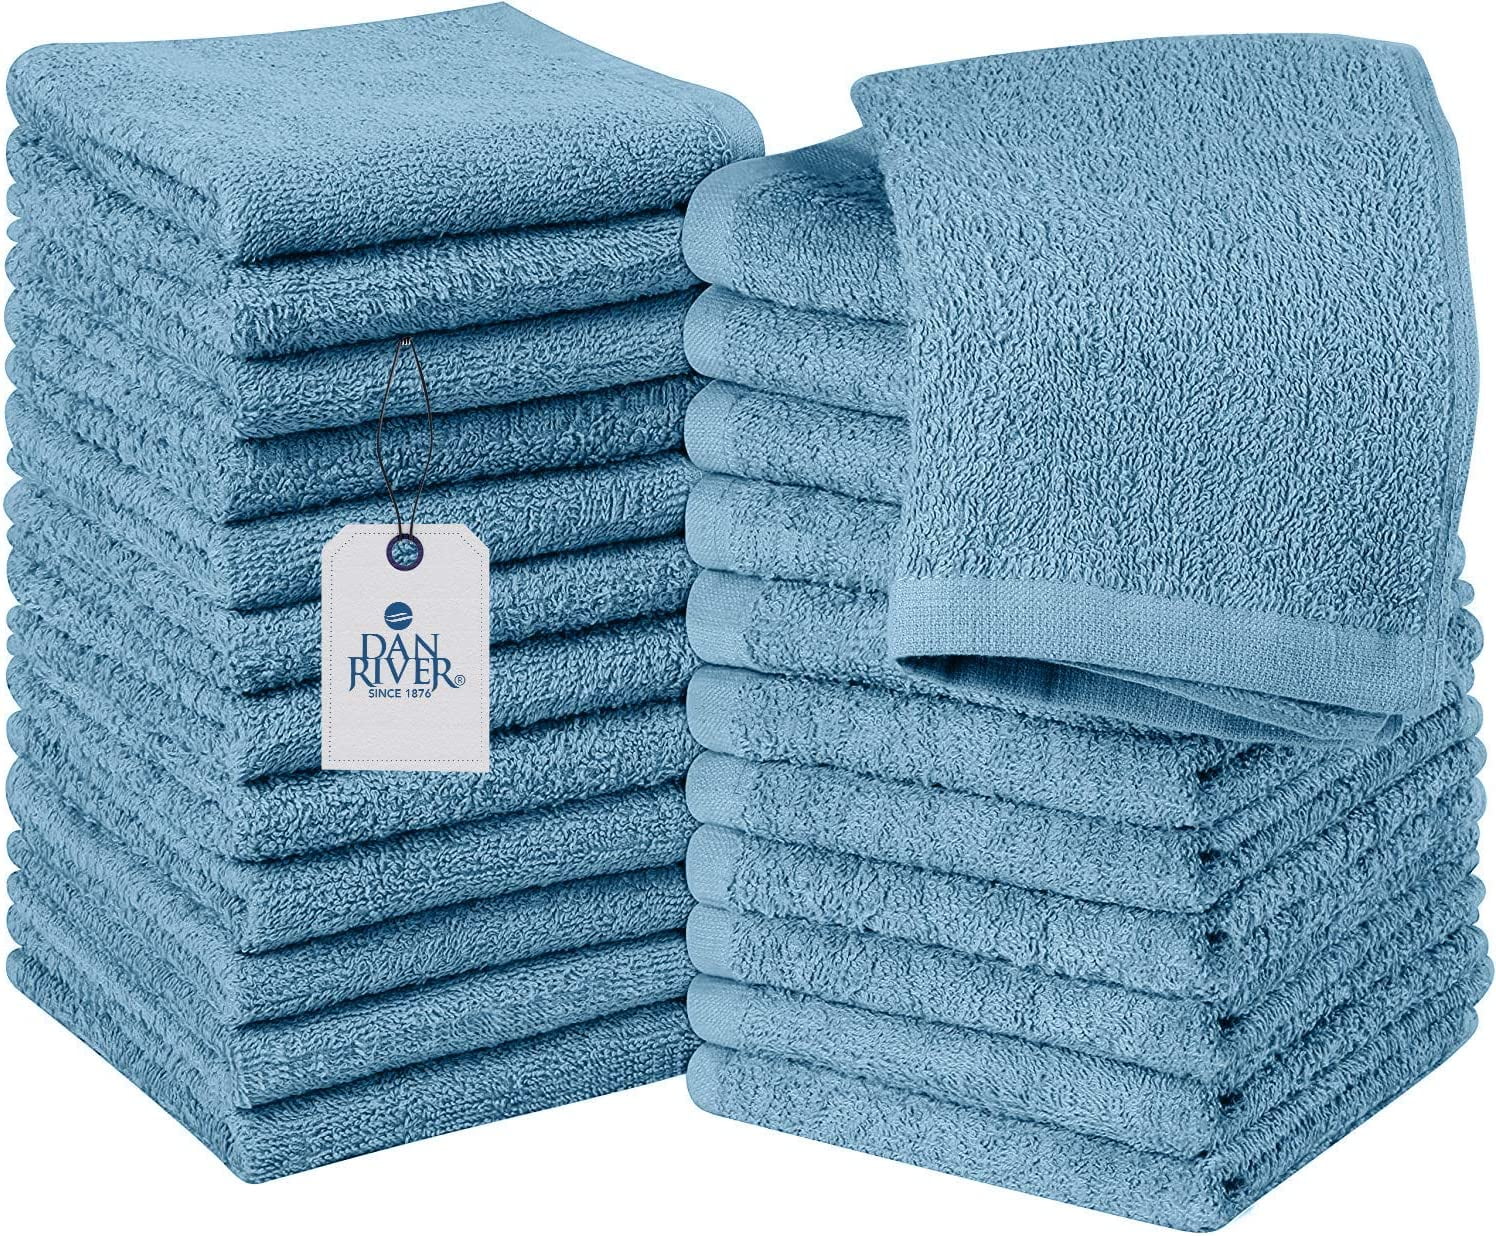 Morgan Home 6 Pack Soft 100% Terry Cotton Wash Cloths Rags Blue White  Washcloths